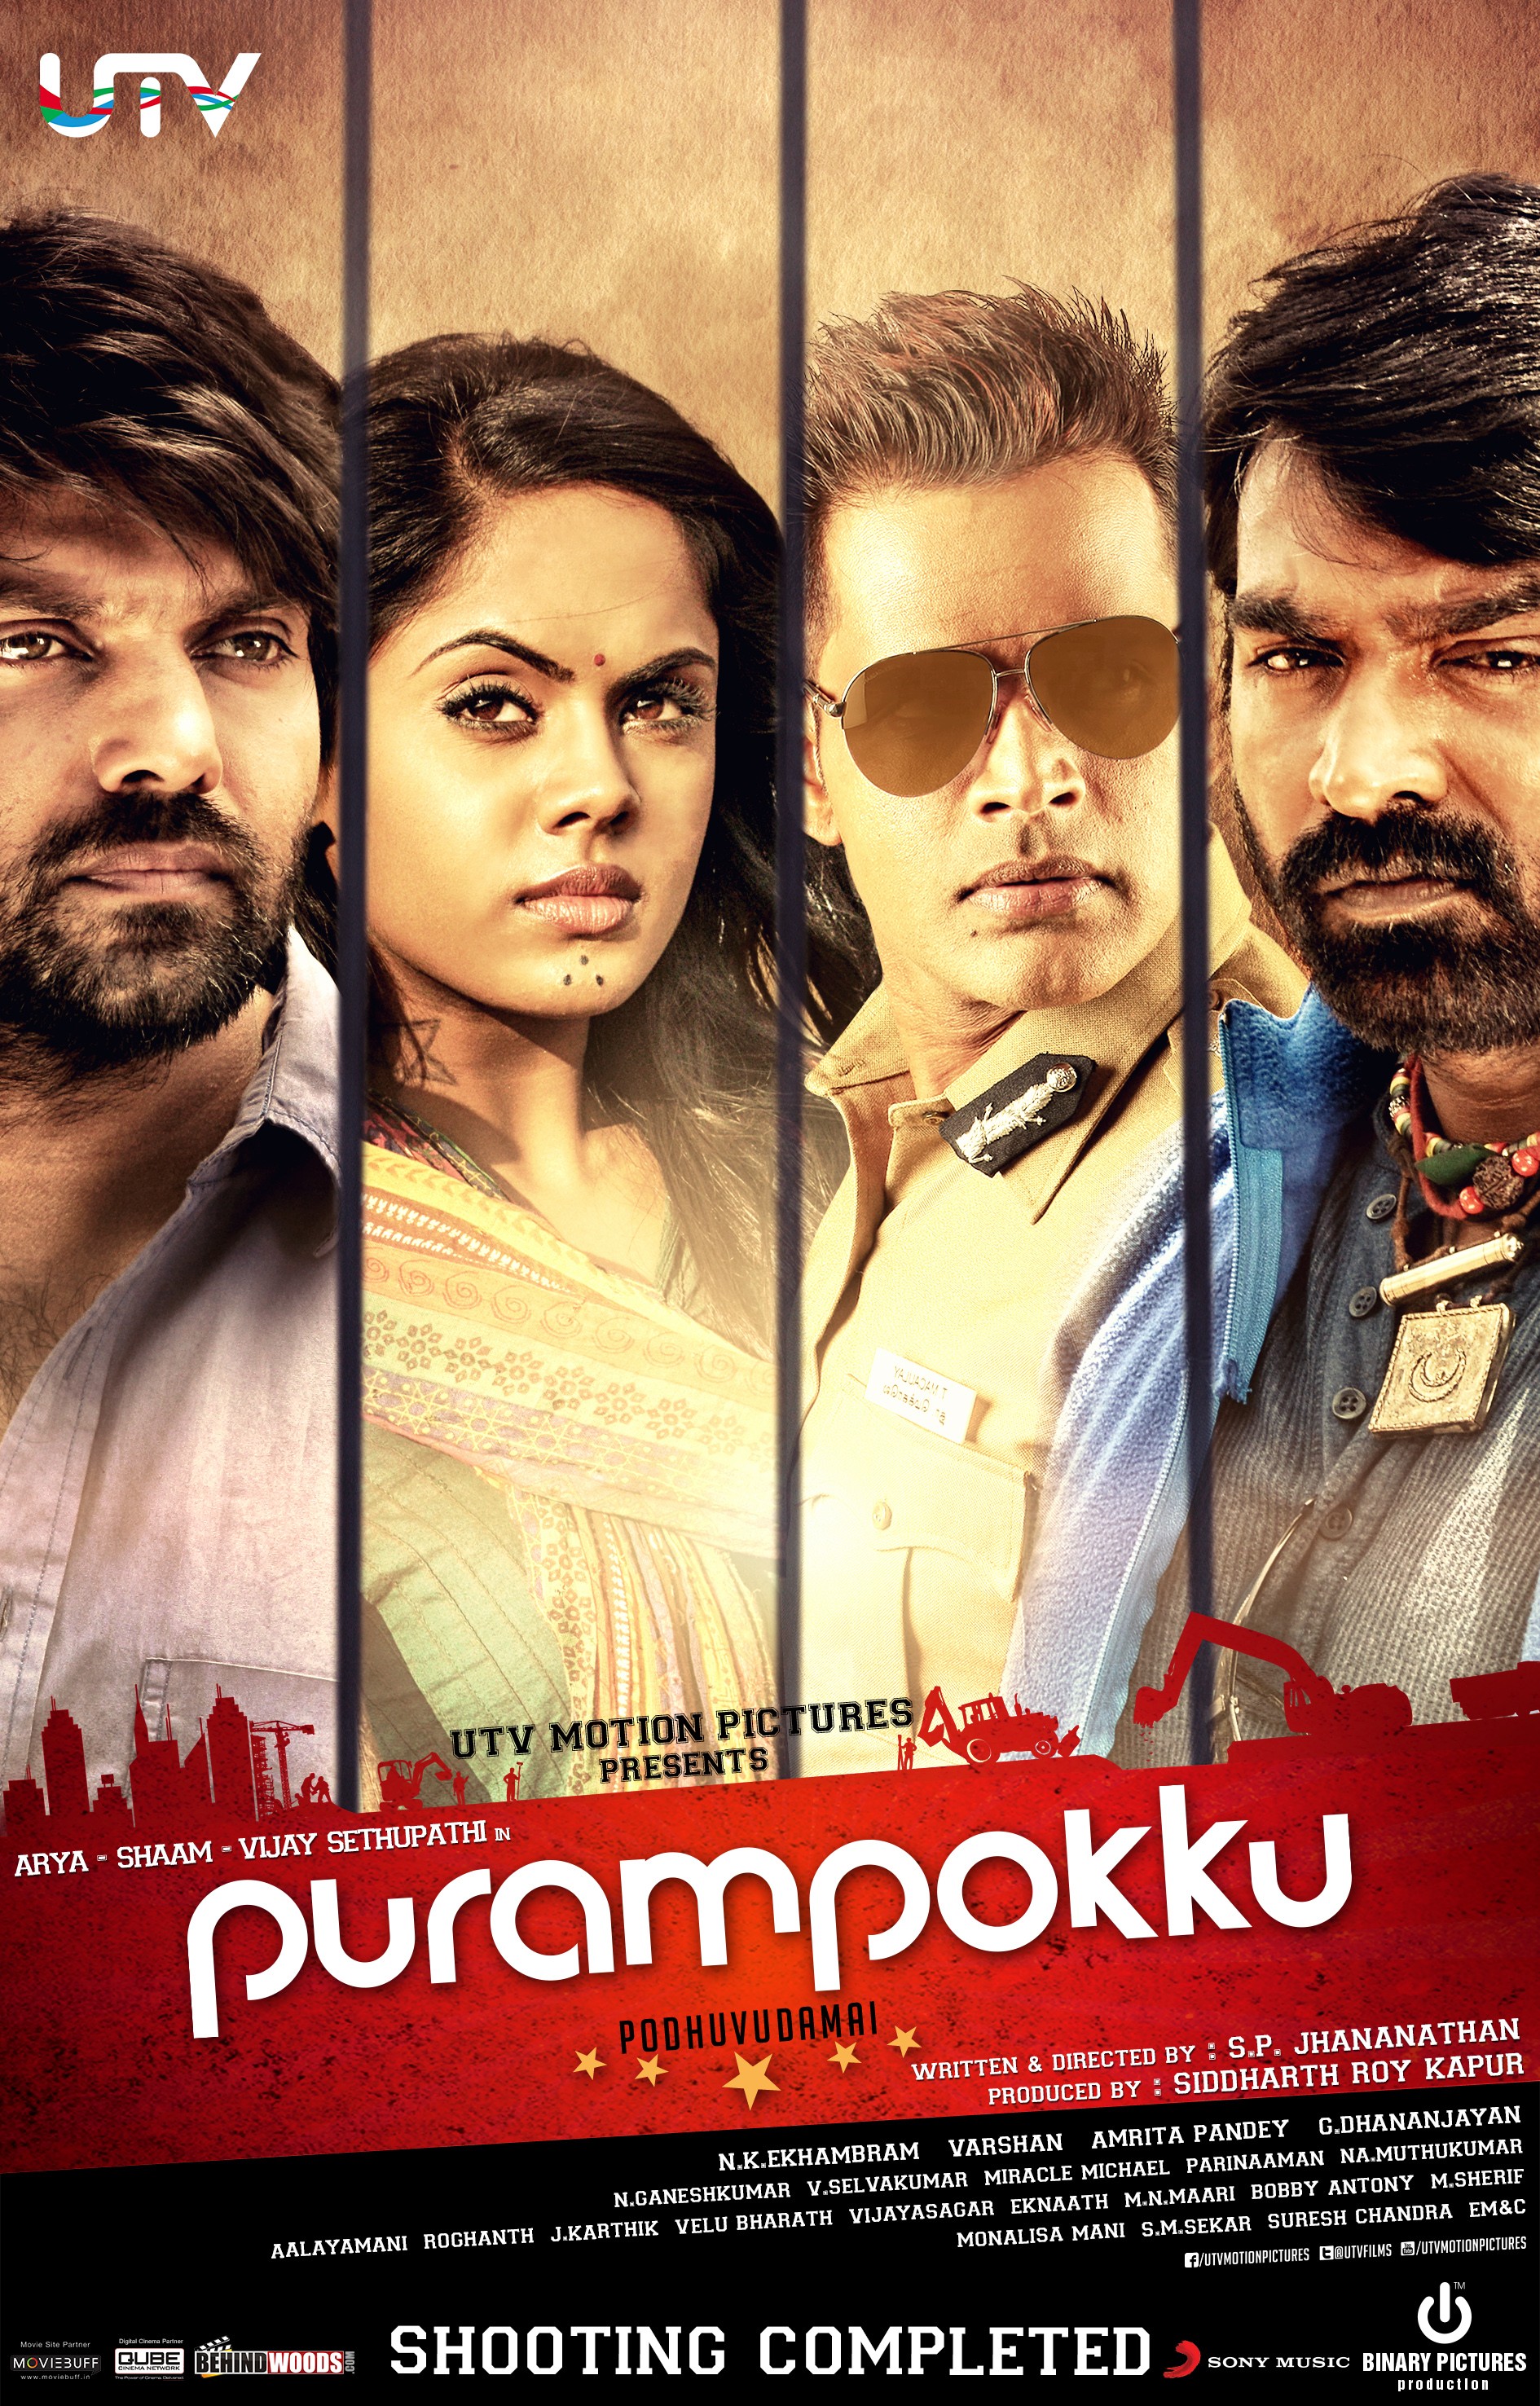 Mega Sized Movie Poster Image for Purampokku Poduvudamai (#5 of 5)